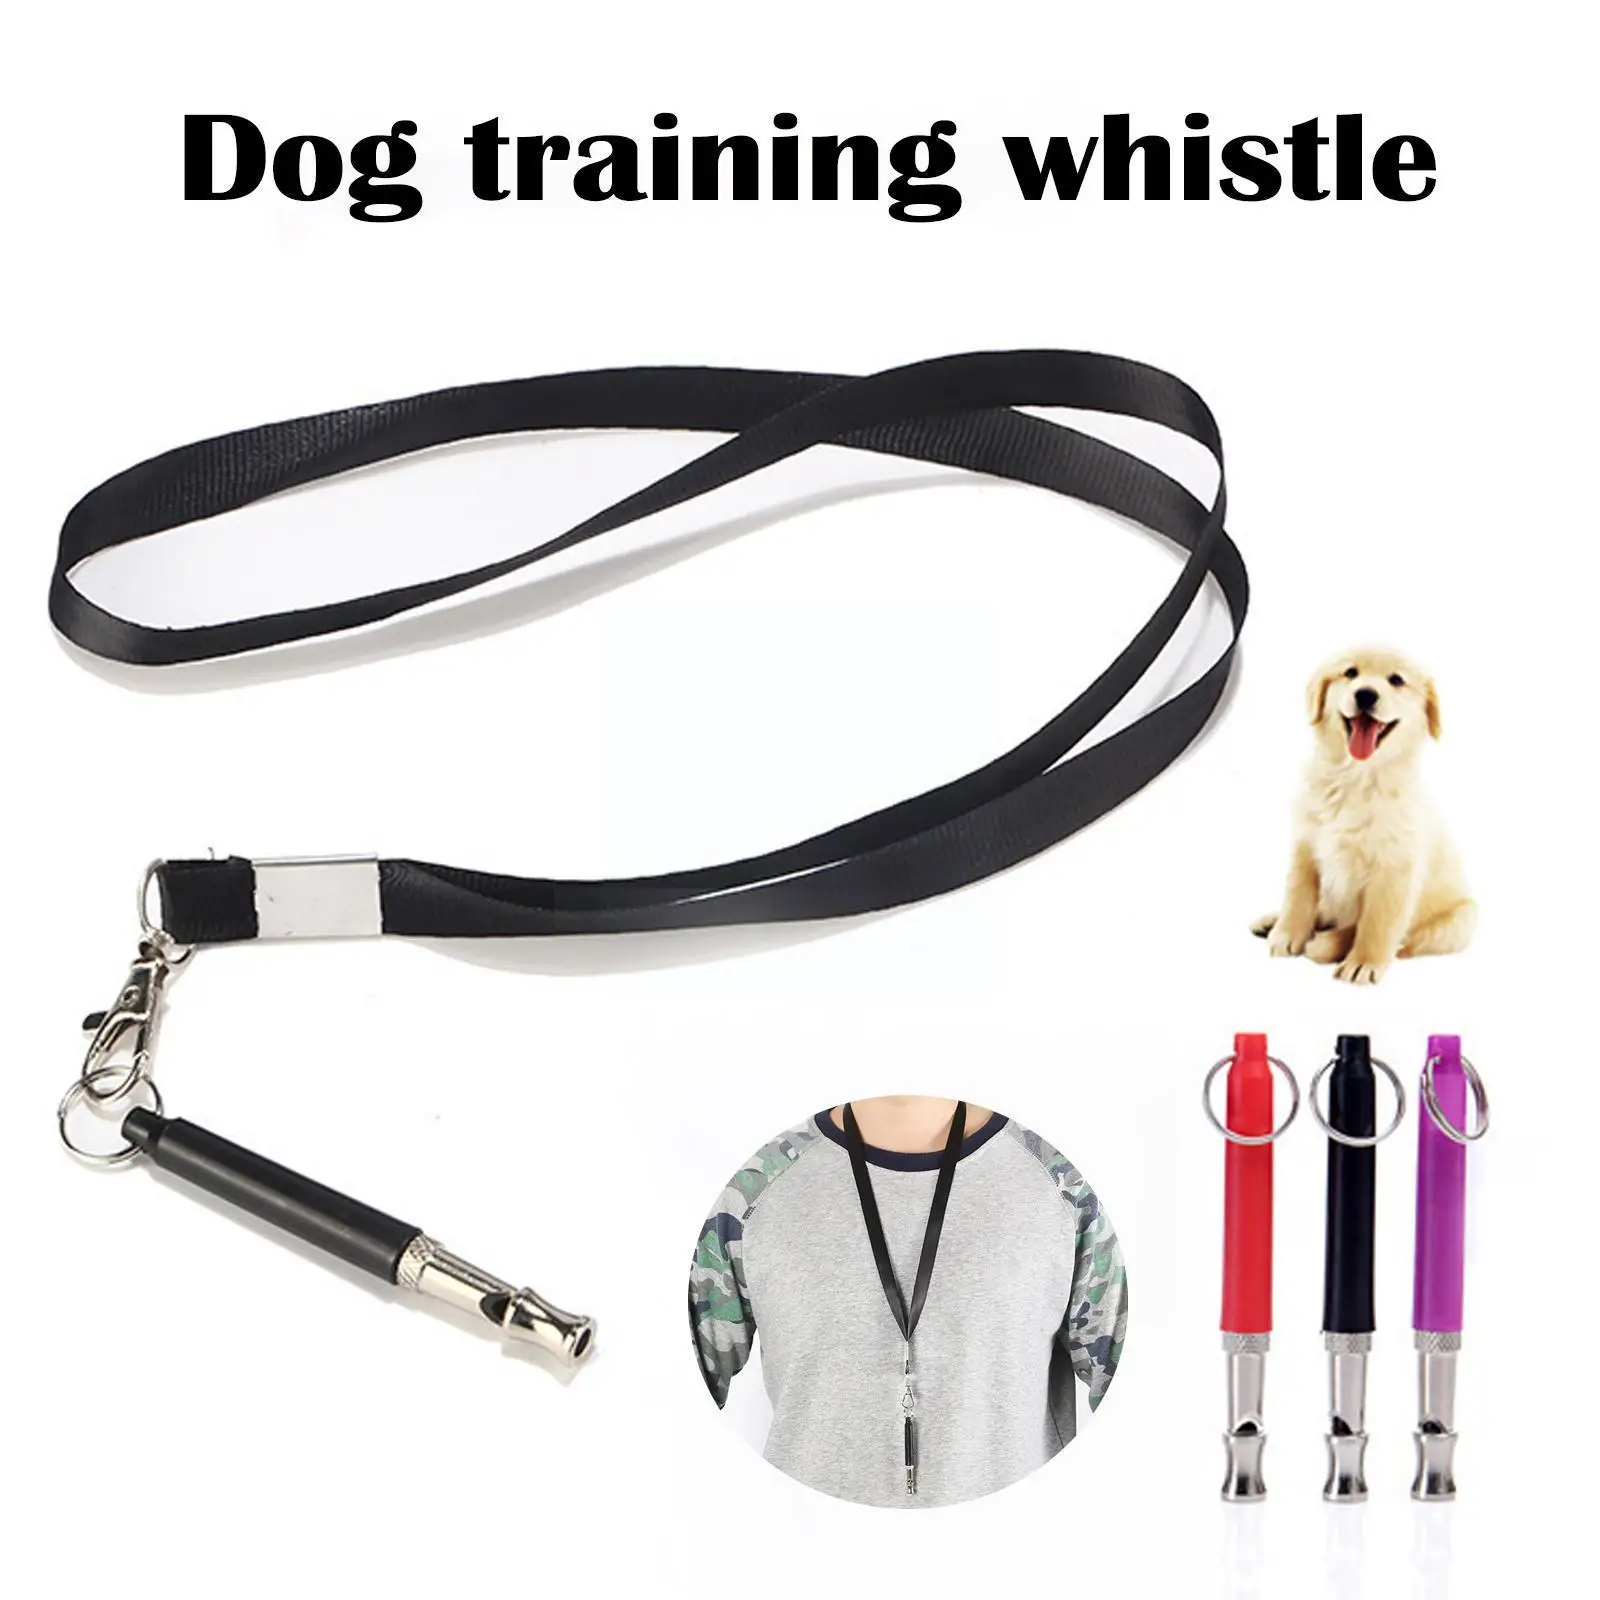 

Dog Whistle To Stop Barking Neighbors Adjustable Ultrasonic Whistles Dog Whistle Training Dog Professional Silent Recall N1k5